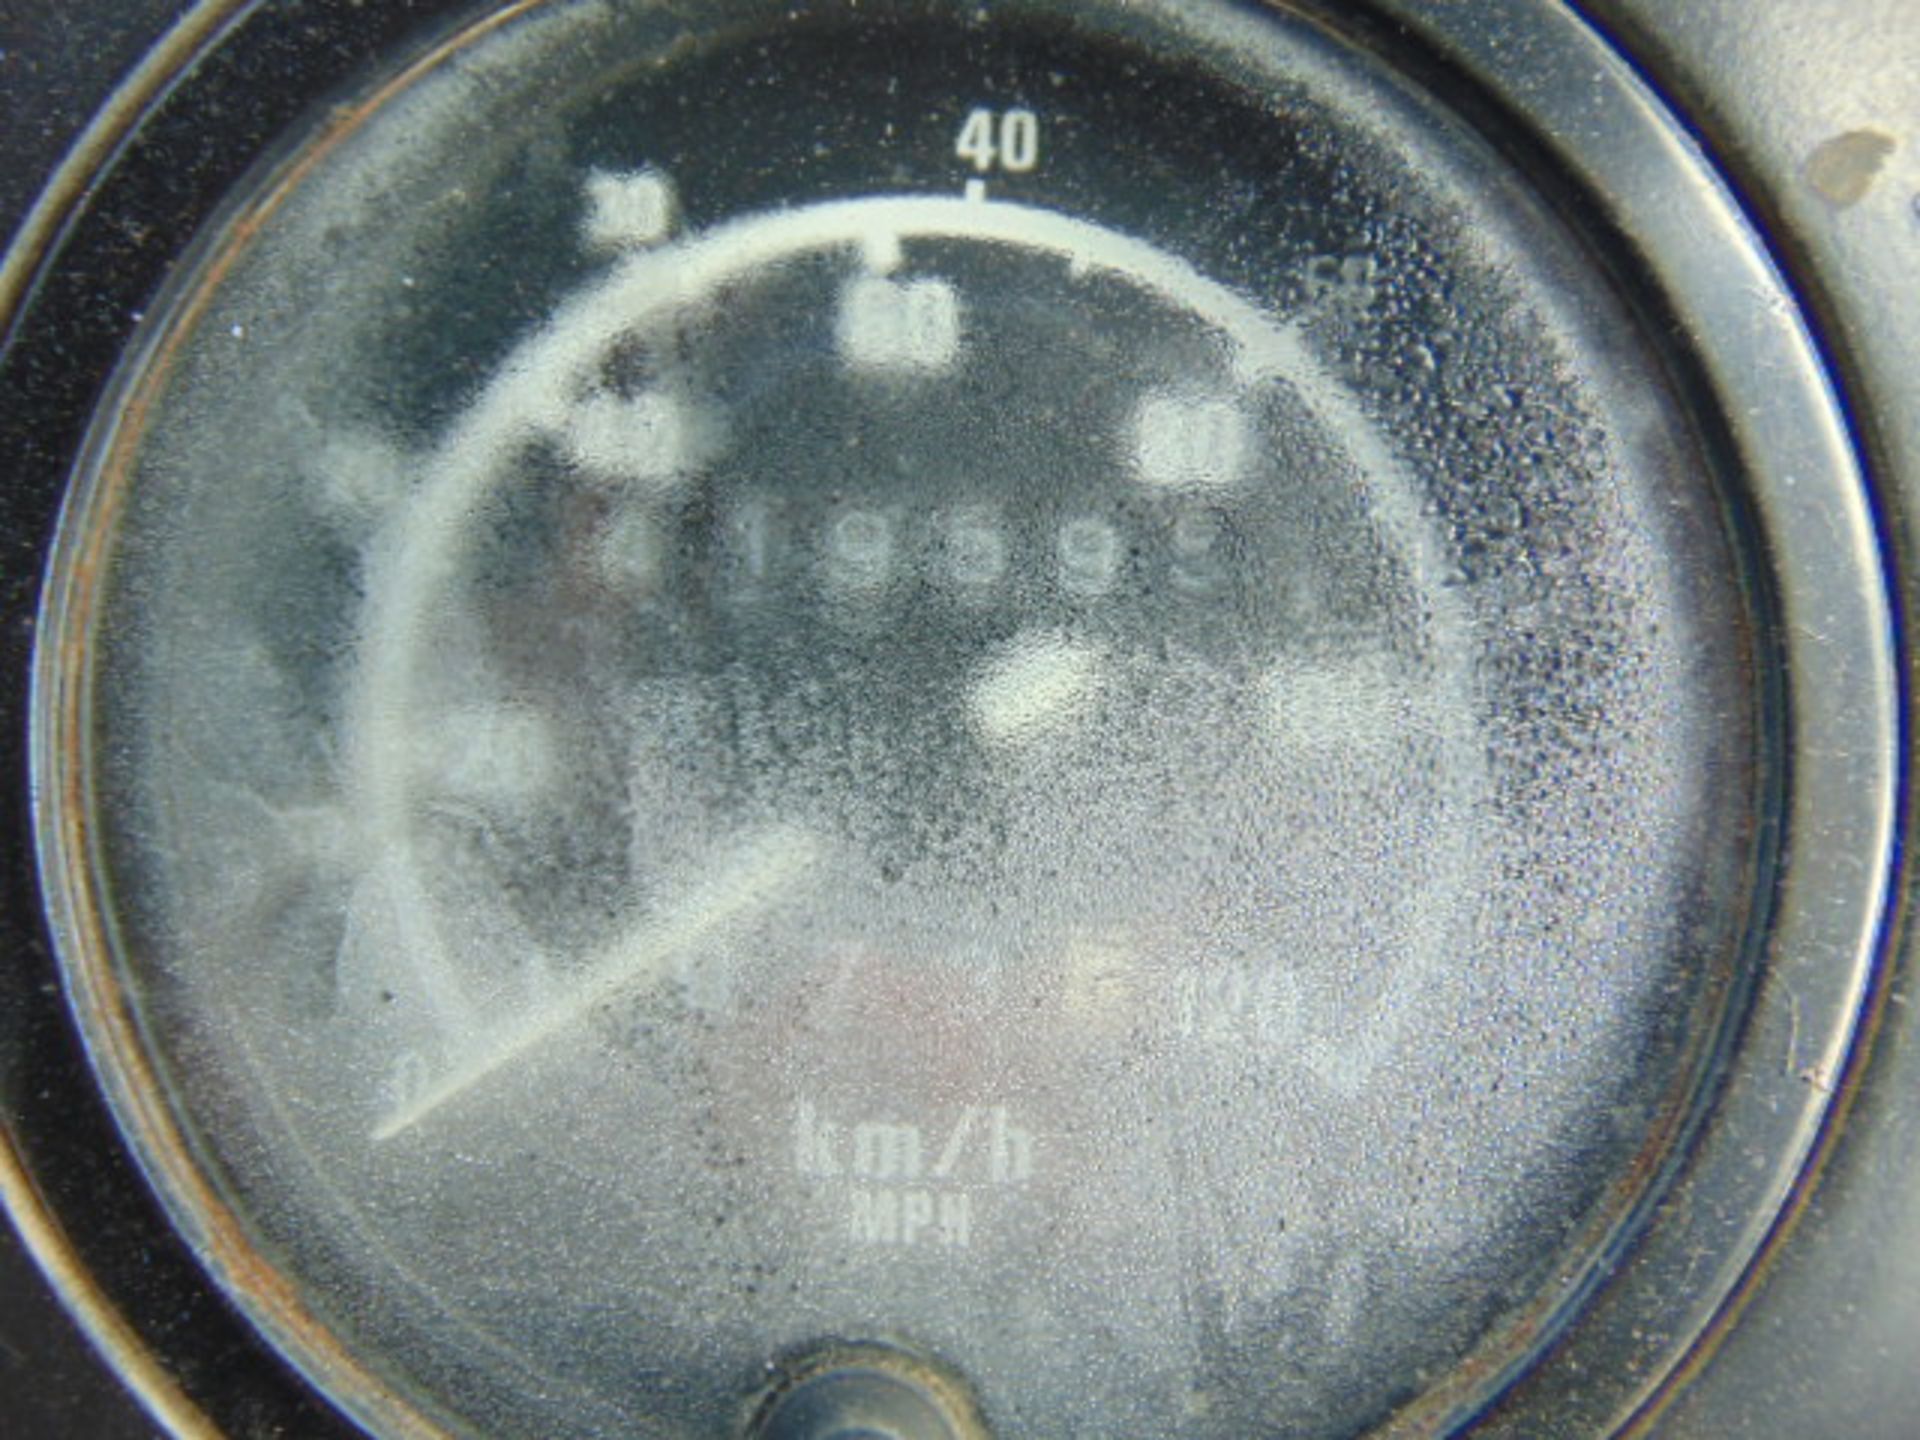 Leyland Daf 45/150 4 x 4 - Image 11 of 12